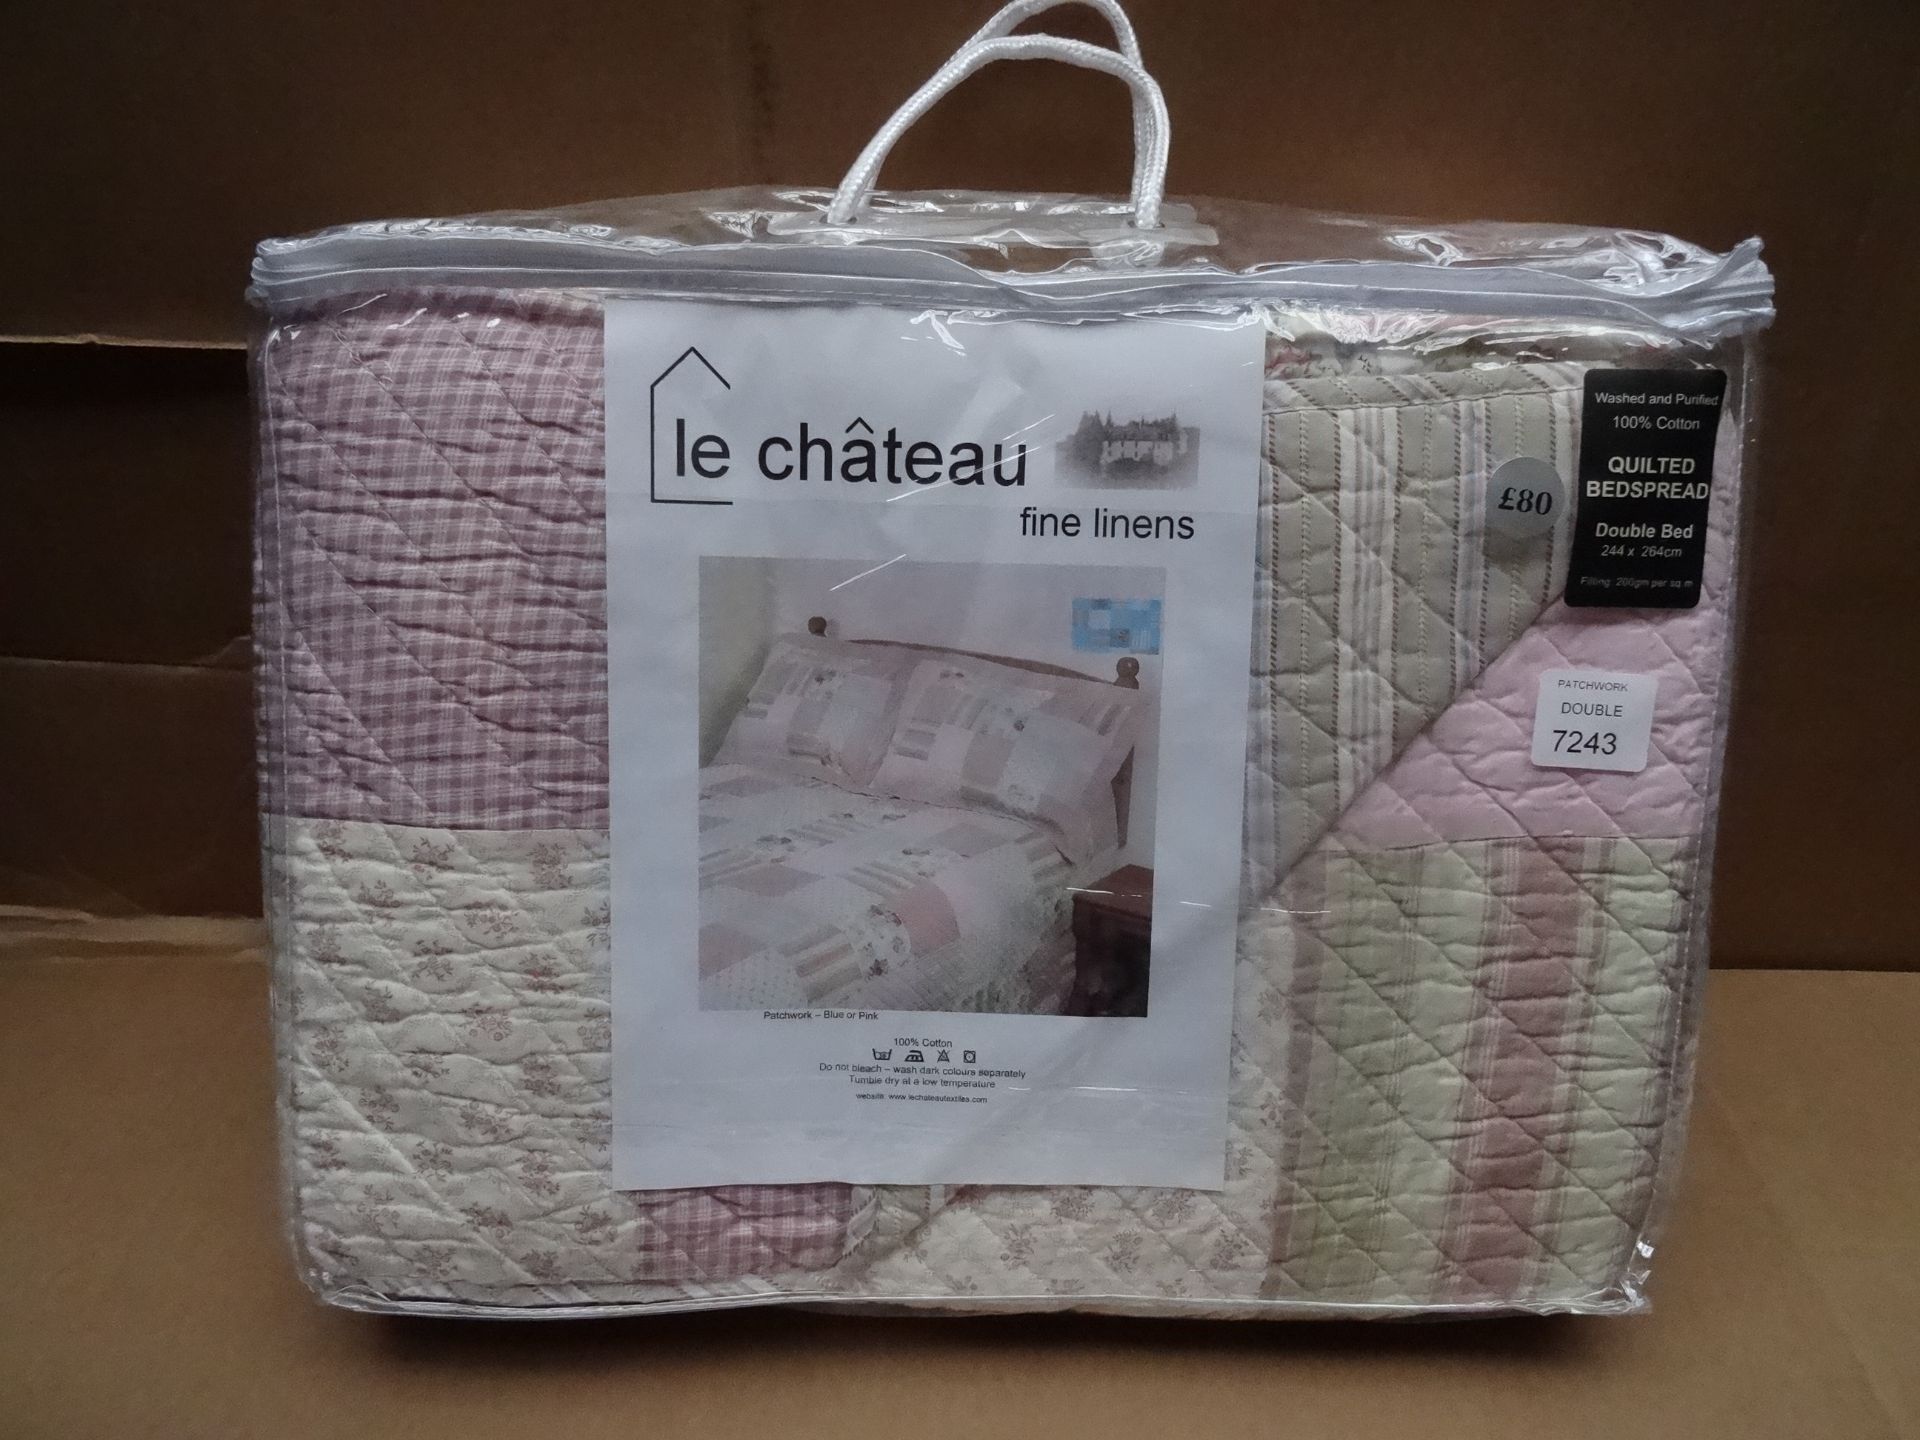 1 x Le Chateau Fine Linens 100% Cotton Quilted Bedspread. Size: Double. Filling 200gm per sqm.